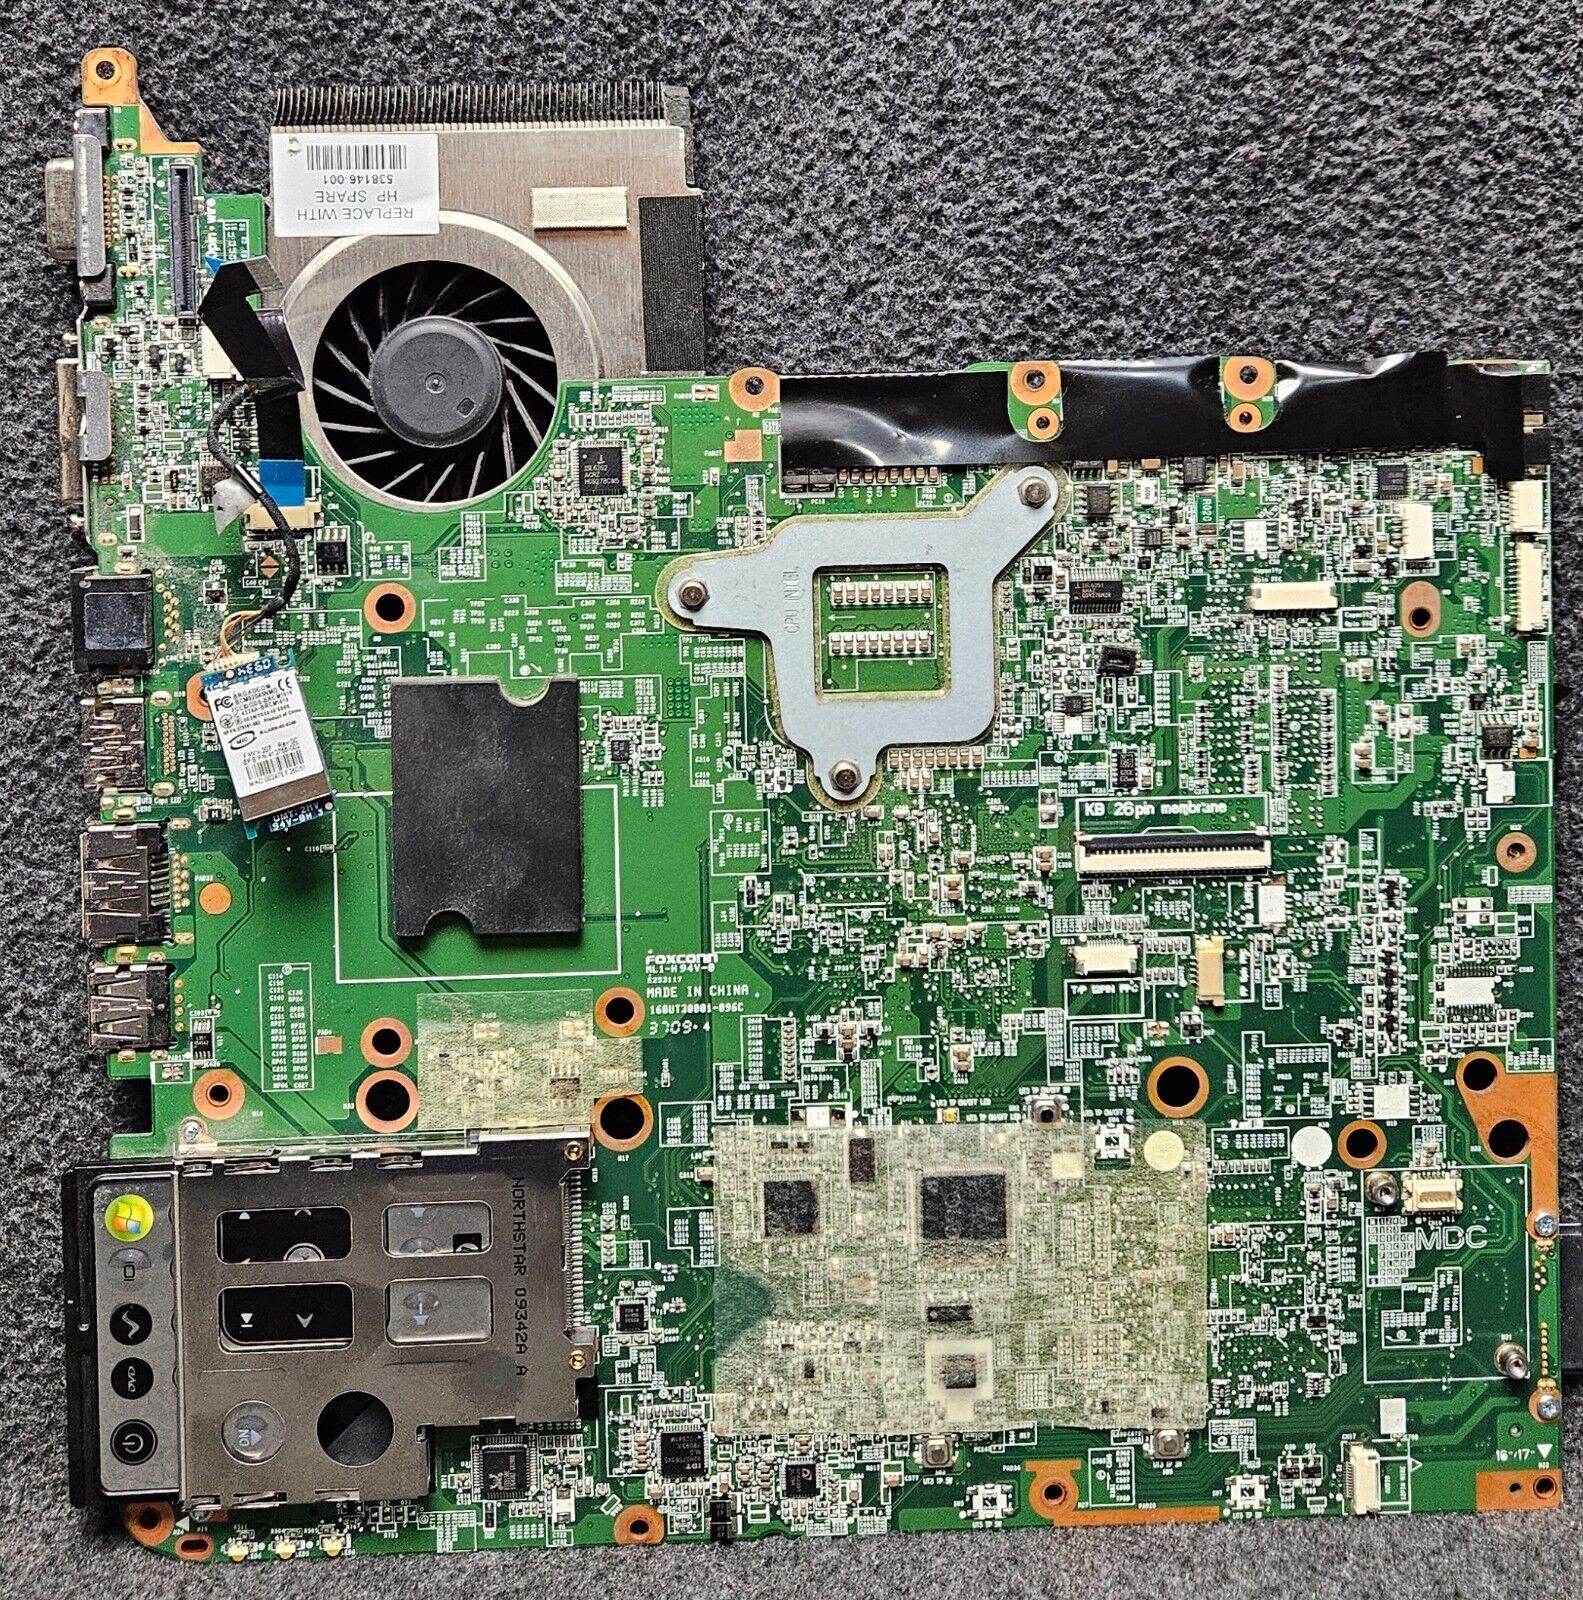 HP PAVILION DV6t-1200 Motherboard (Foxconn ML1-H94V-0) W/ Intel CORE 2 Duo T9900